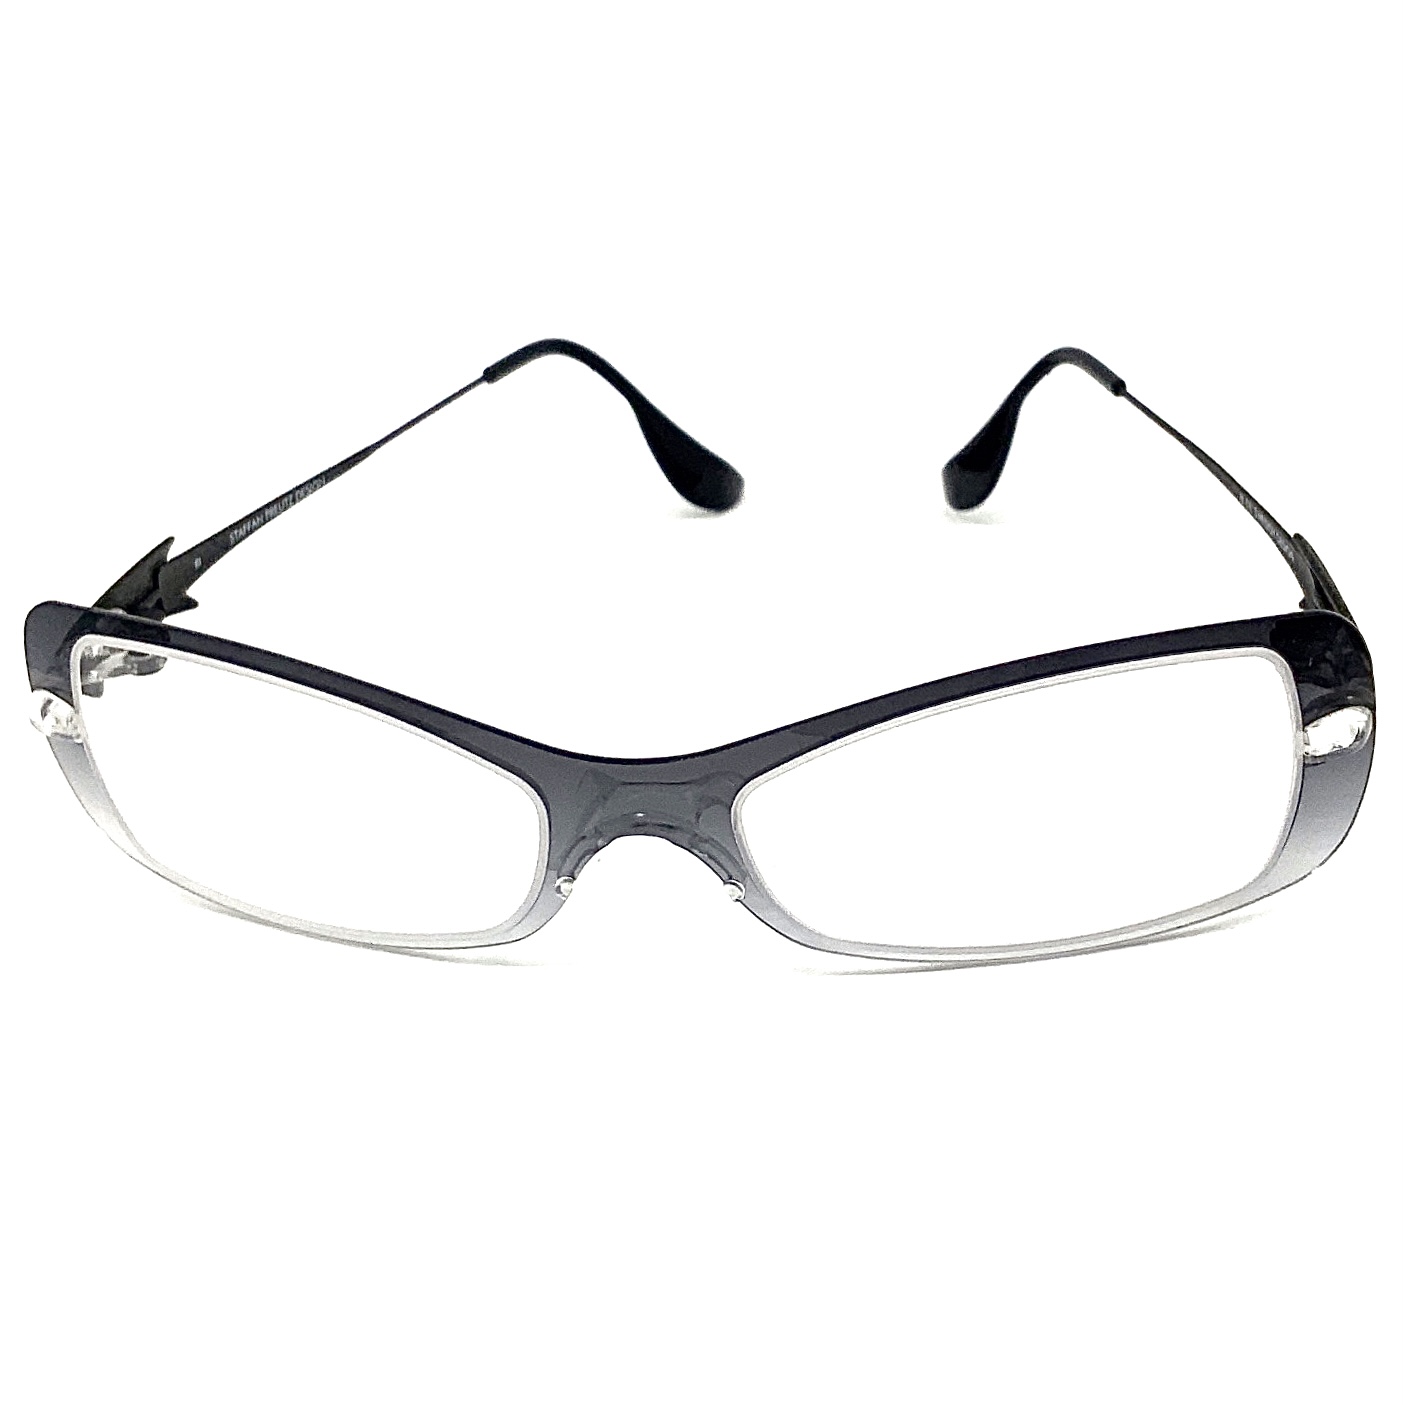 STAFFAN PREUTZ DESIGN 眼鏡 フレーム カーボン プロイツ各部分のサイズは